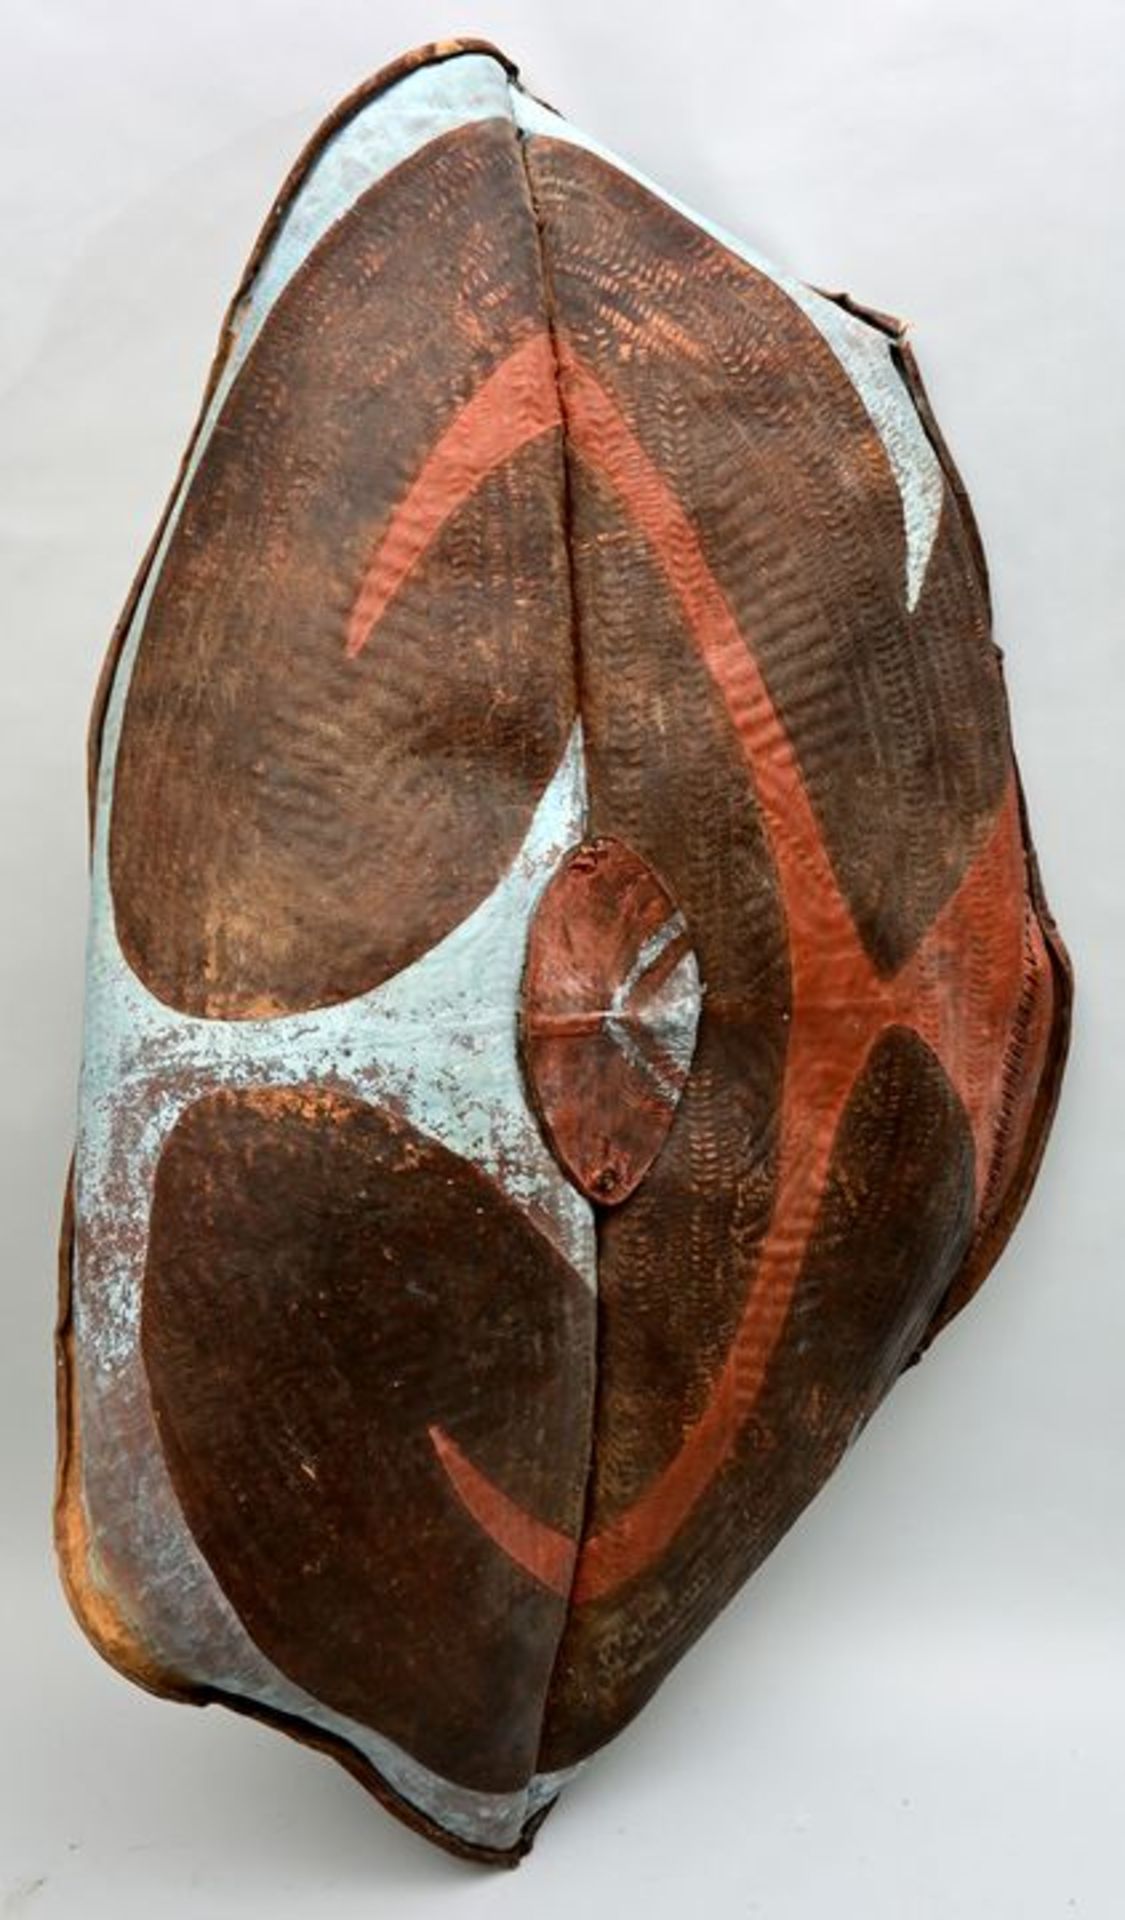 Gr. Schild, Afrika / large leather shield, Afrika